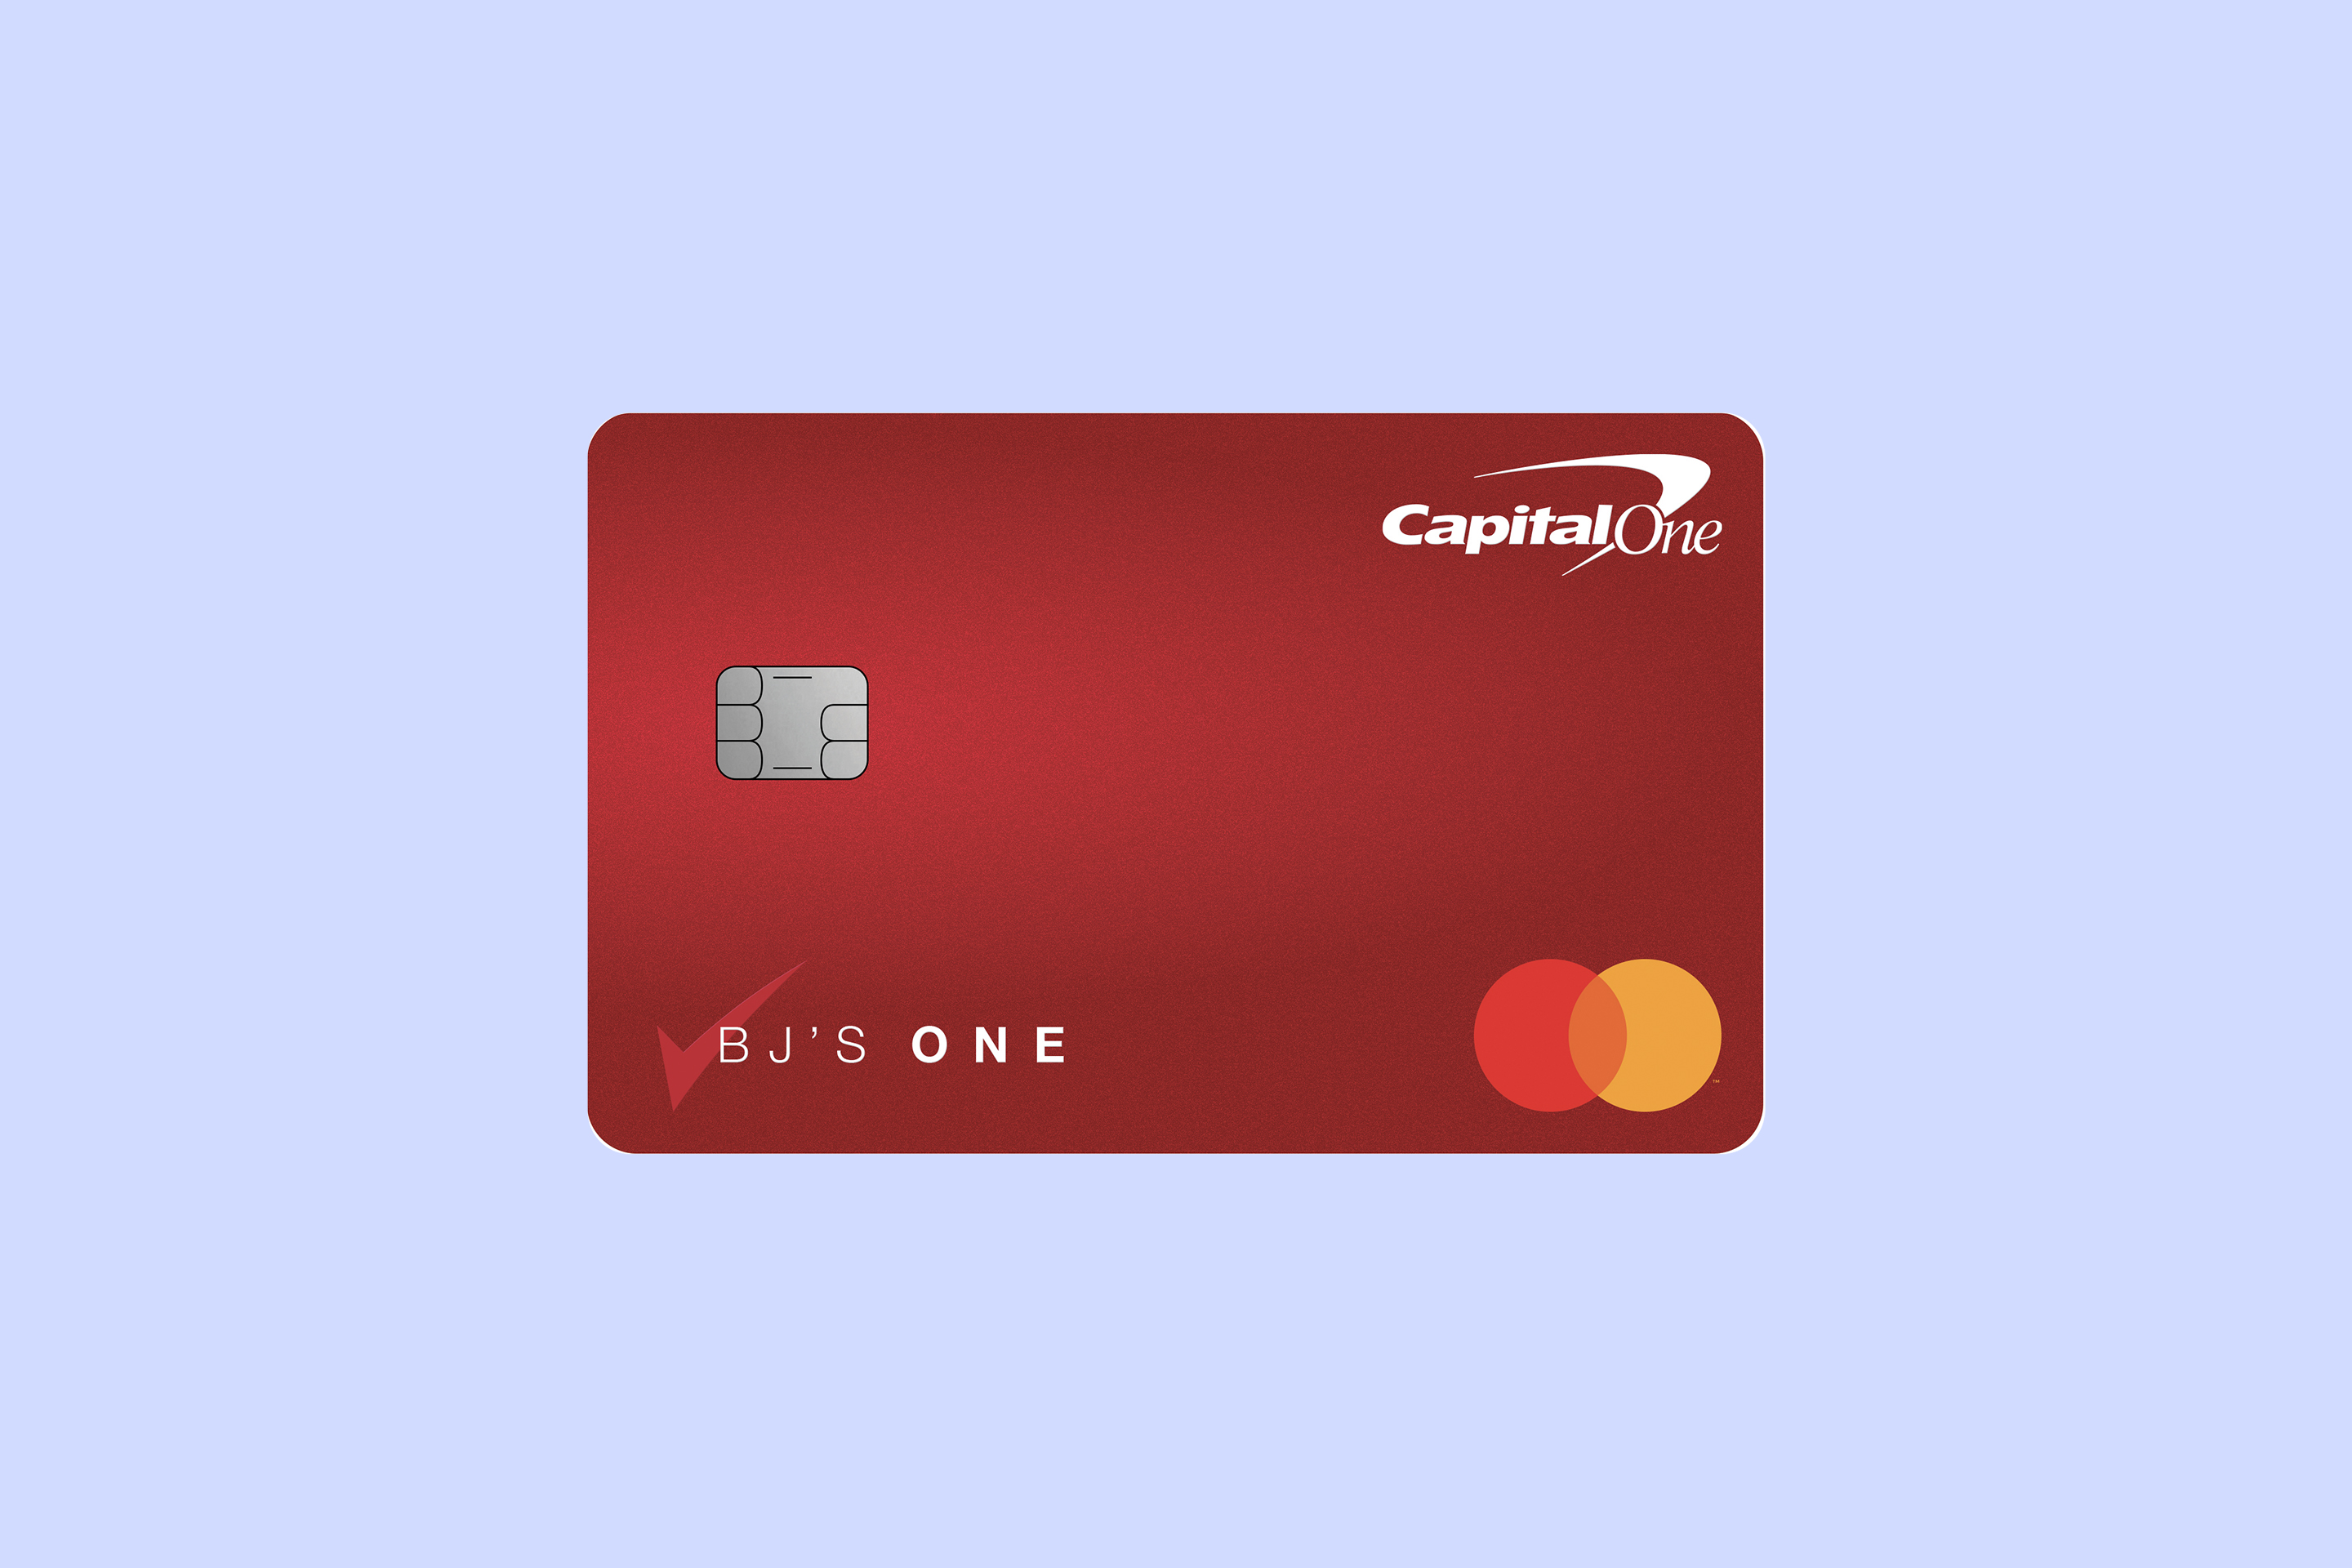 BJ's Oneâ¢ï¸ Mastercard Credit Card by Capital One